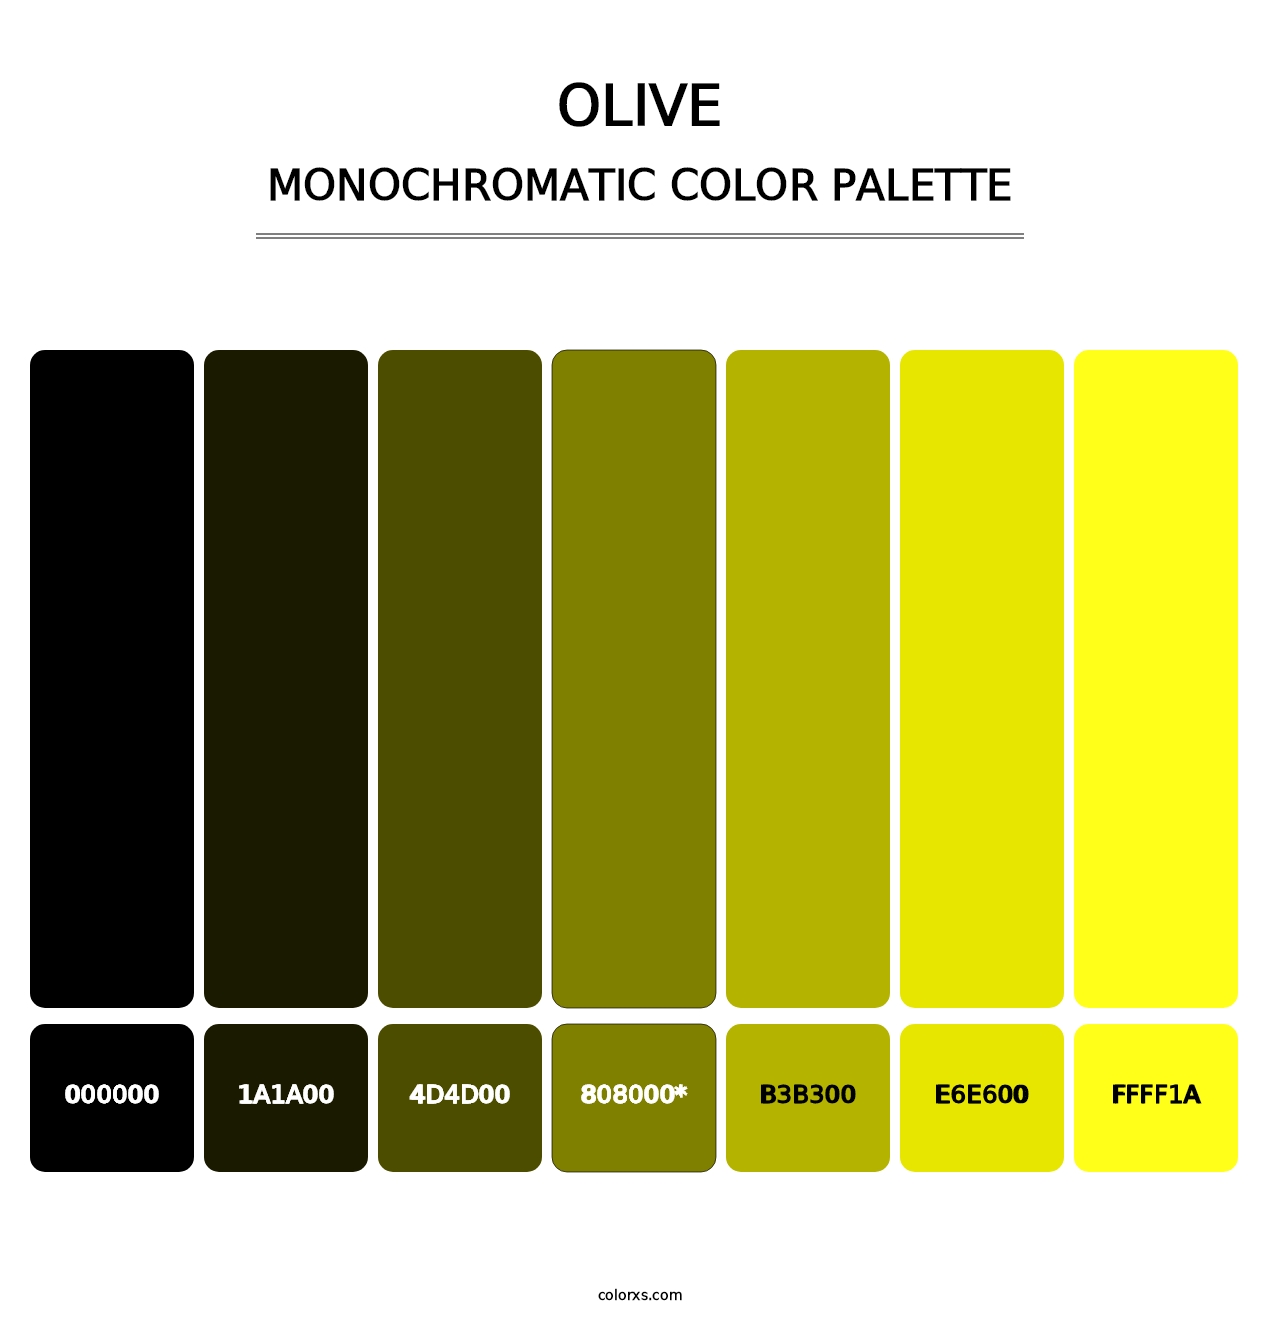 Olive - Monochromatic Color Palette